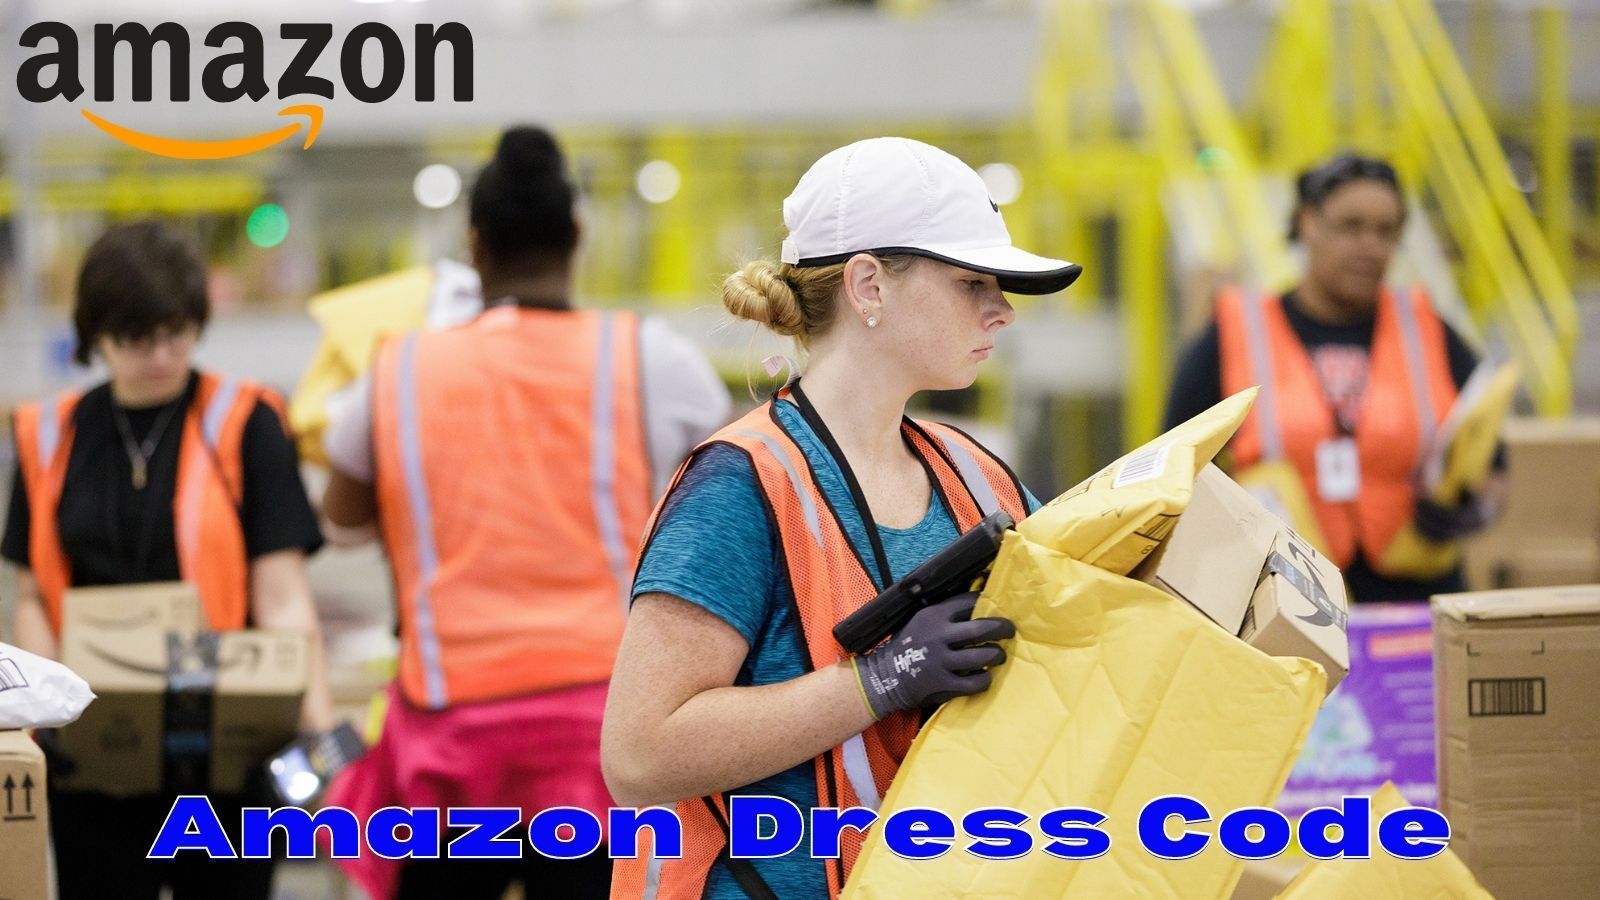 Amazon Dress Code Cherry Picks